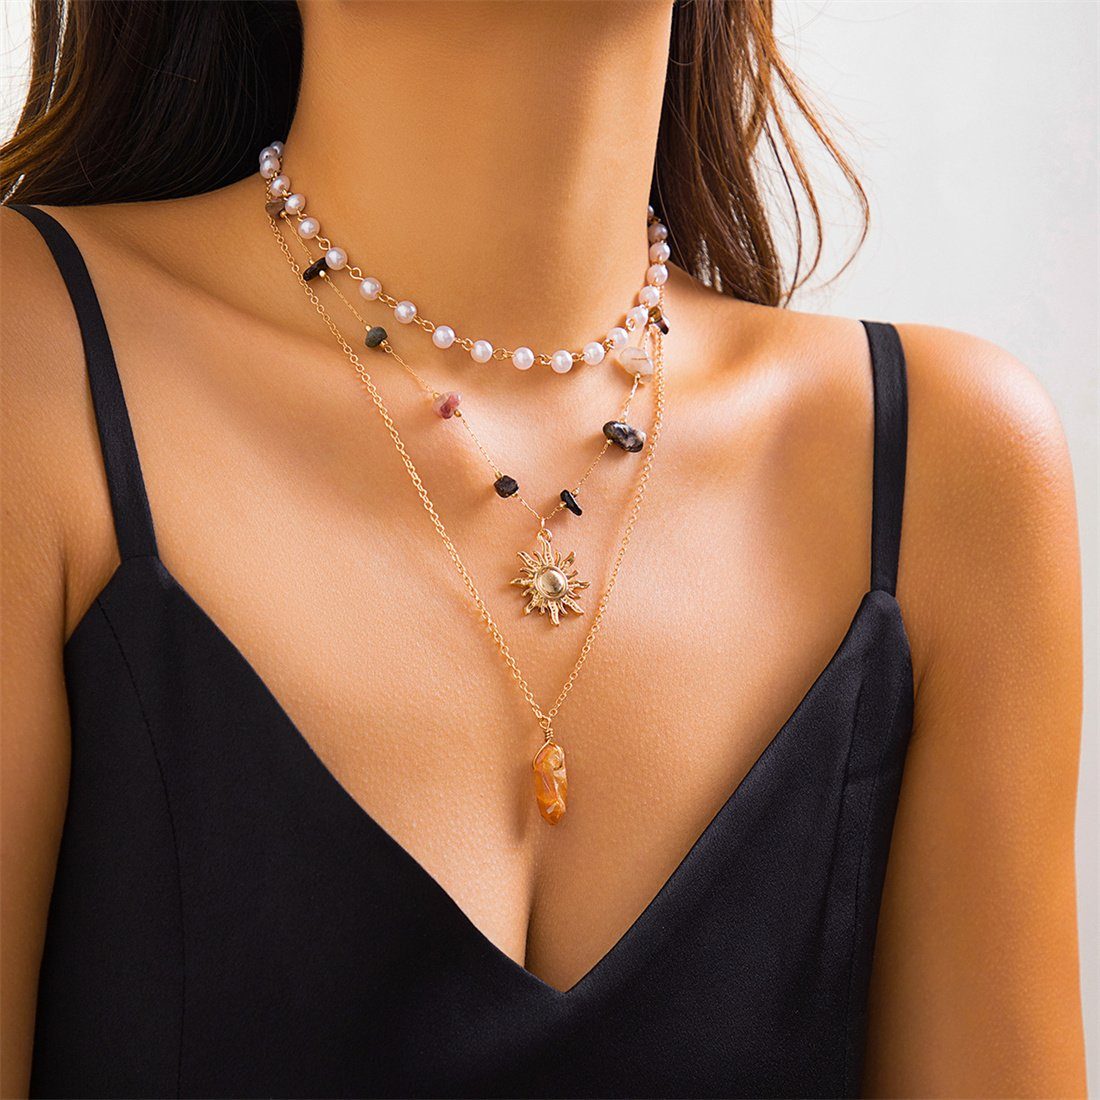 DÖRÖY Choker-Set Frauen faux Perle Halskette Set, böhmischen geschichteten Halskette